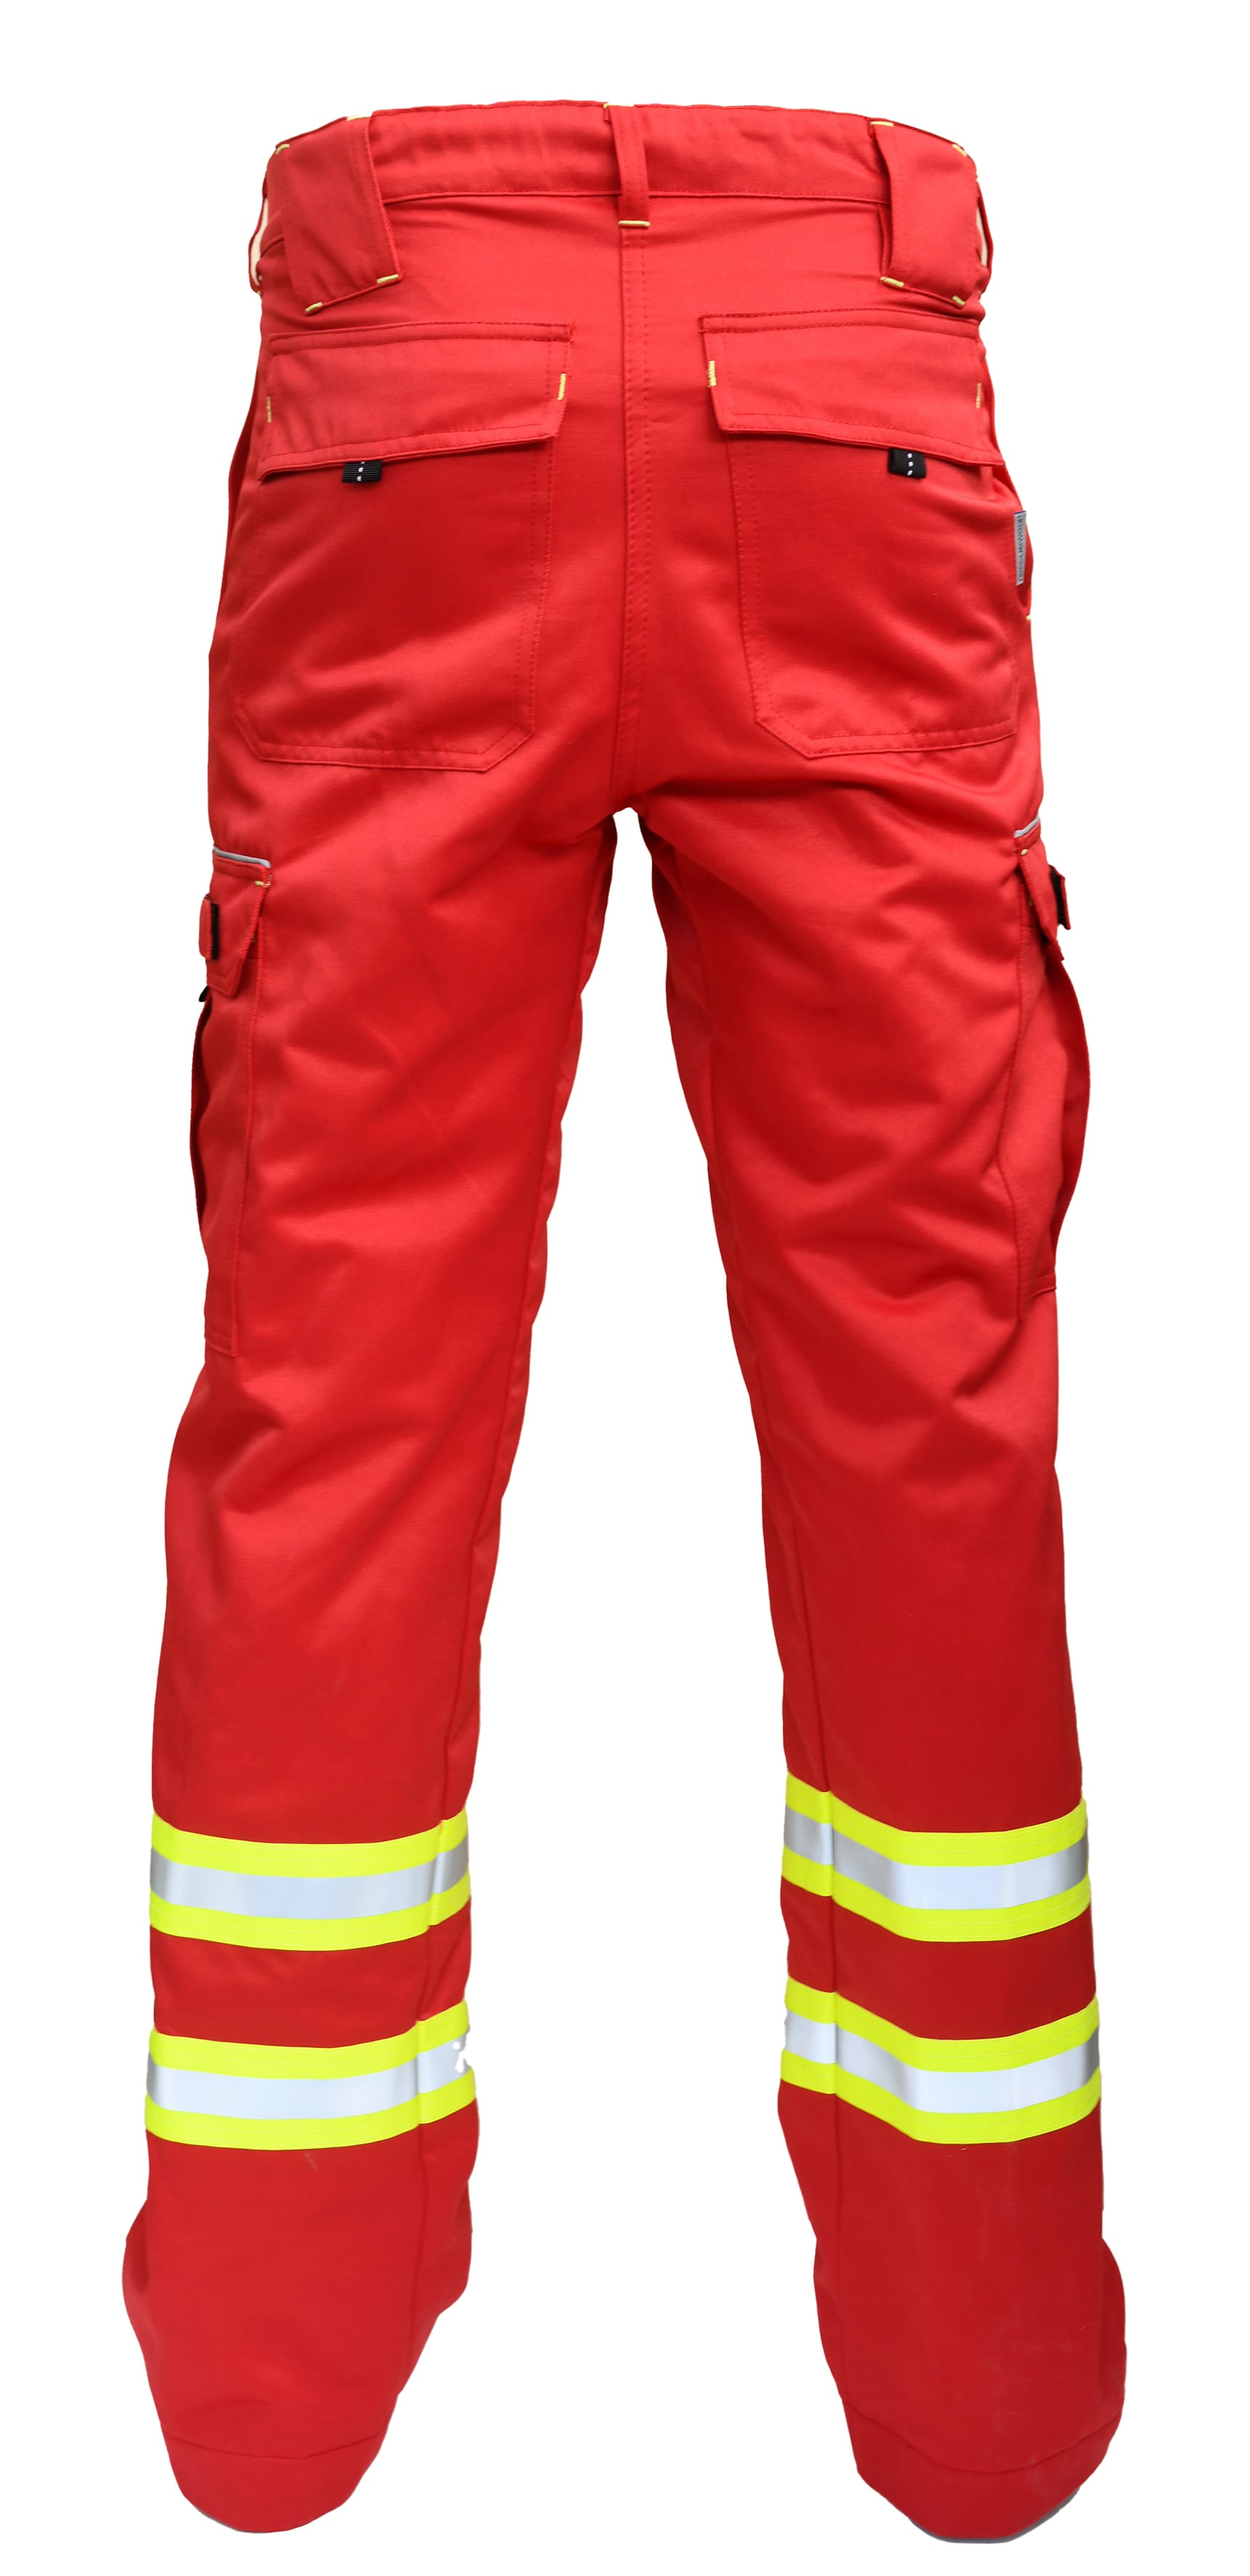 Rescuewear Unisex Hose Wasserrettung Rot - 32